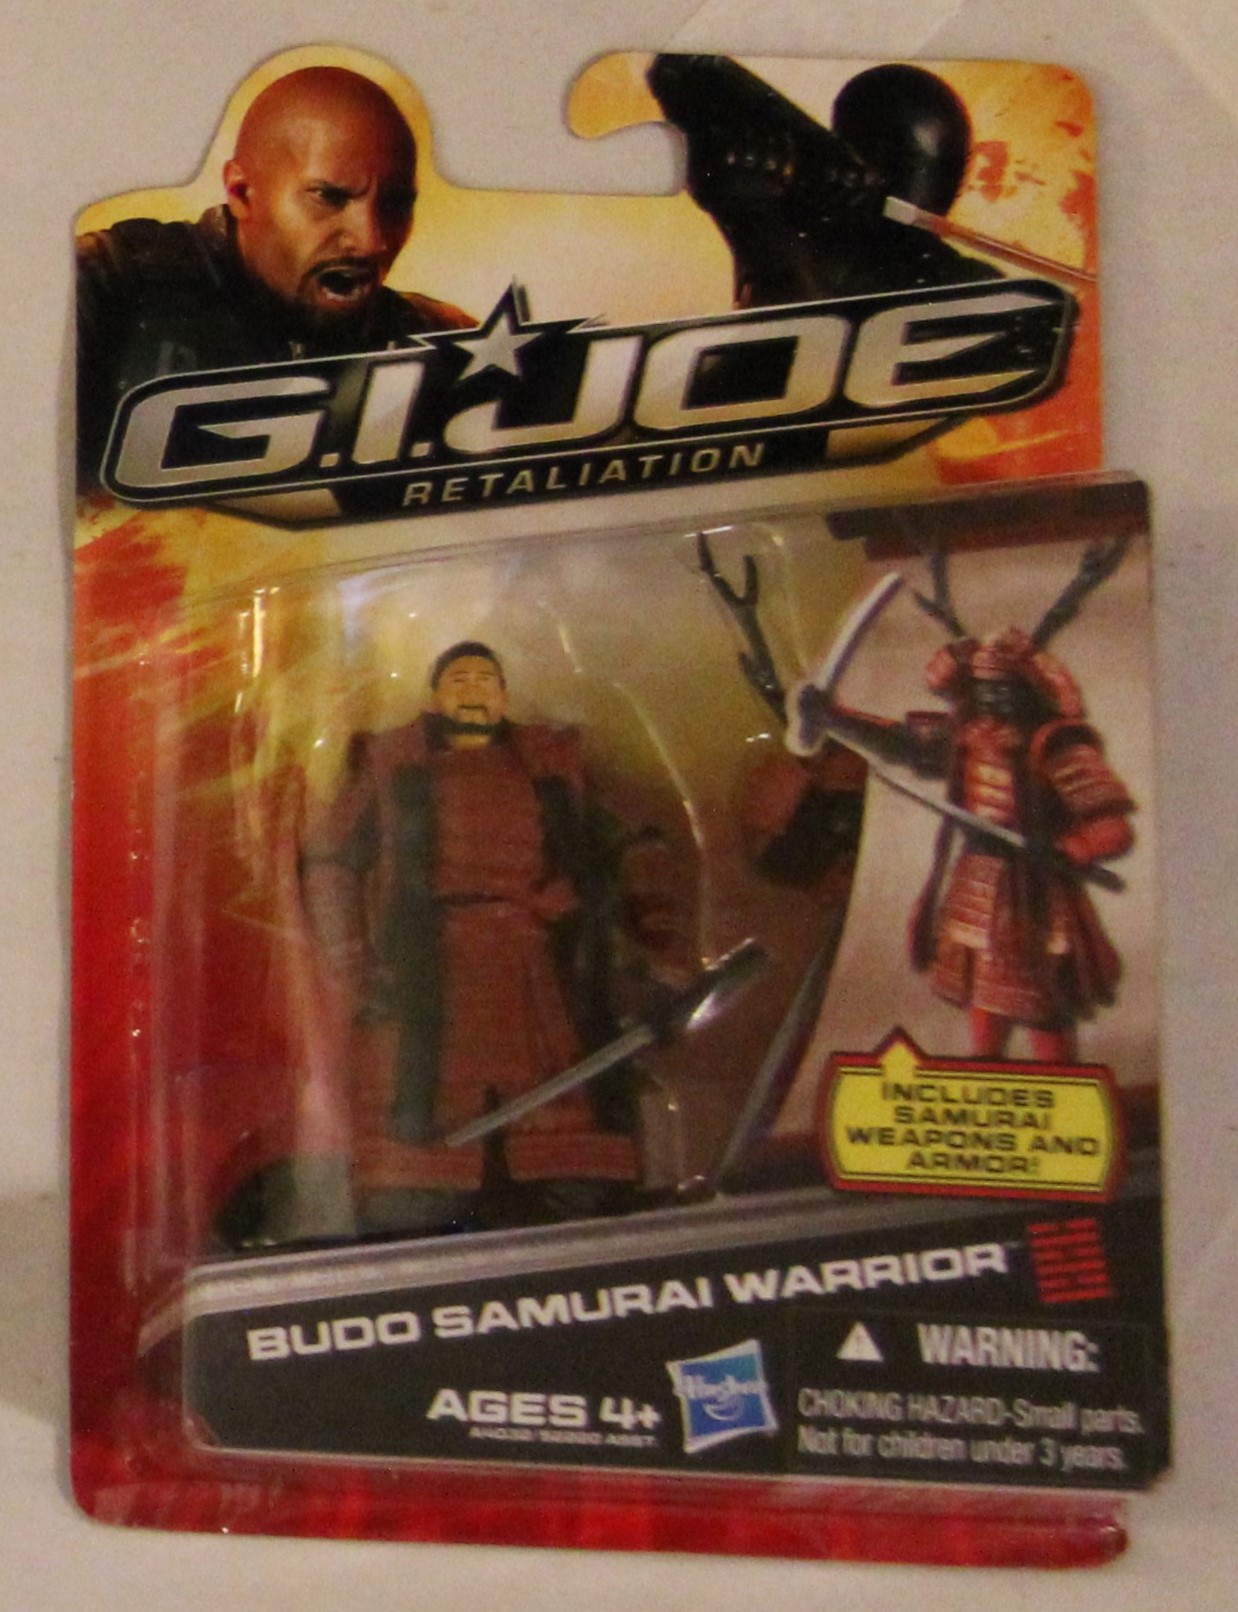 2013 Budo Samurai Warrior